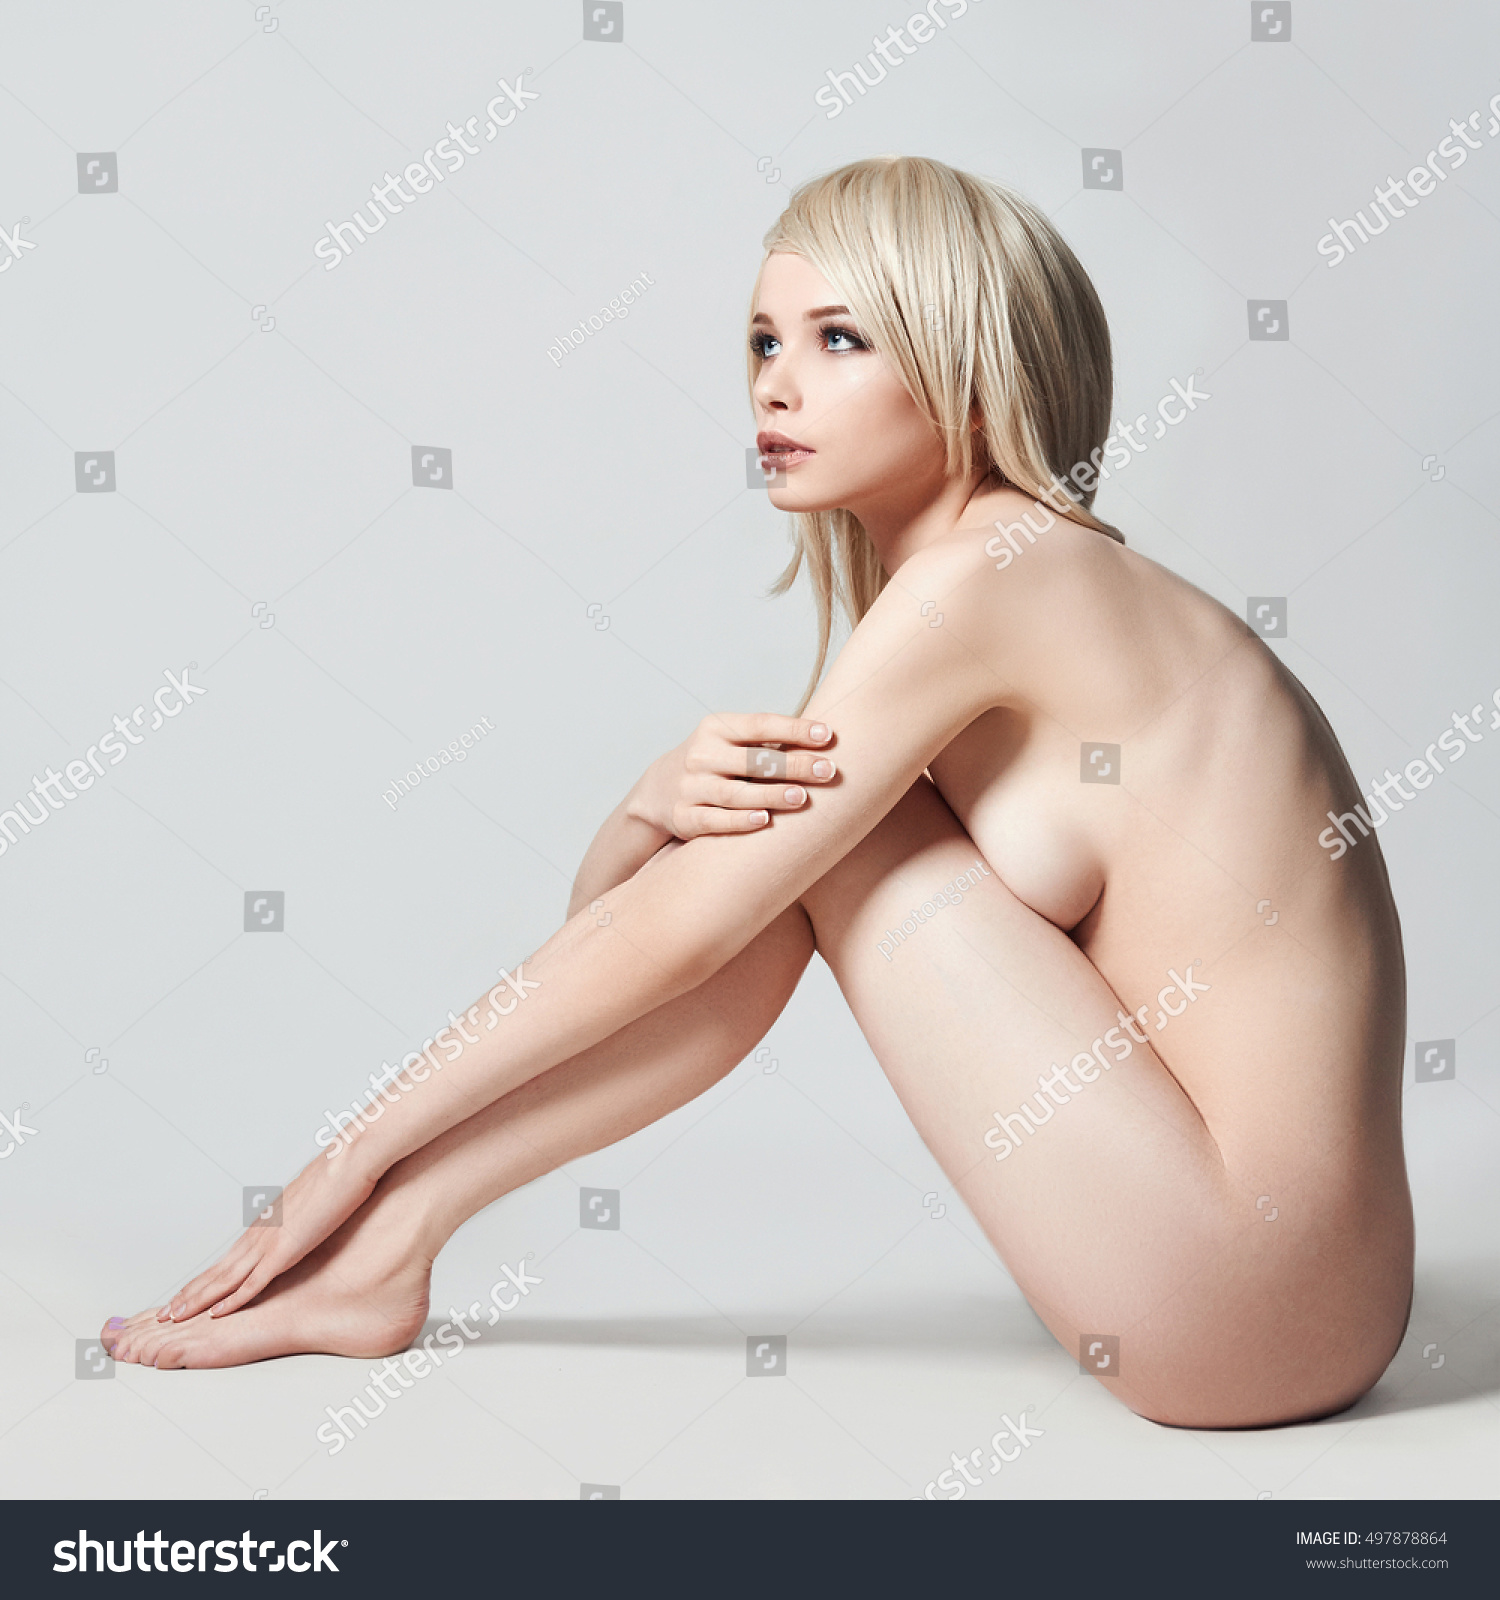 Perfect erotic girl naked